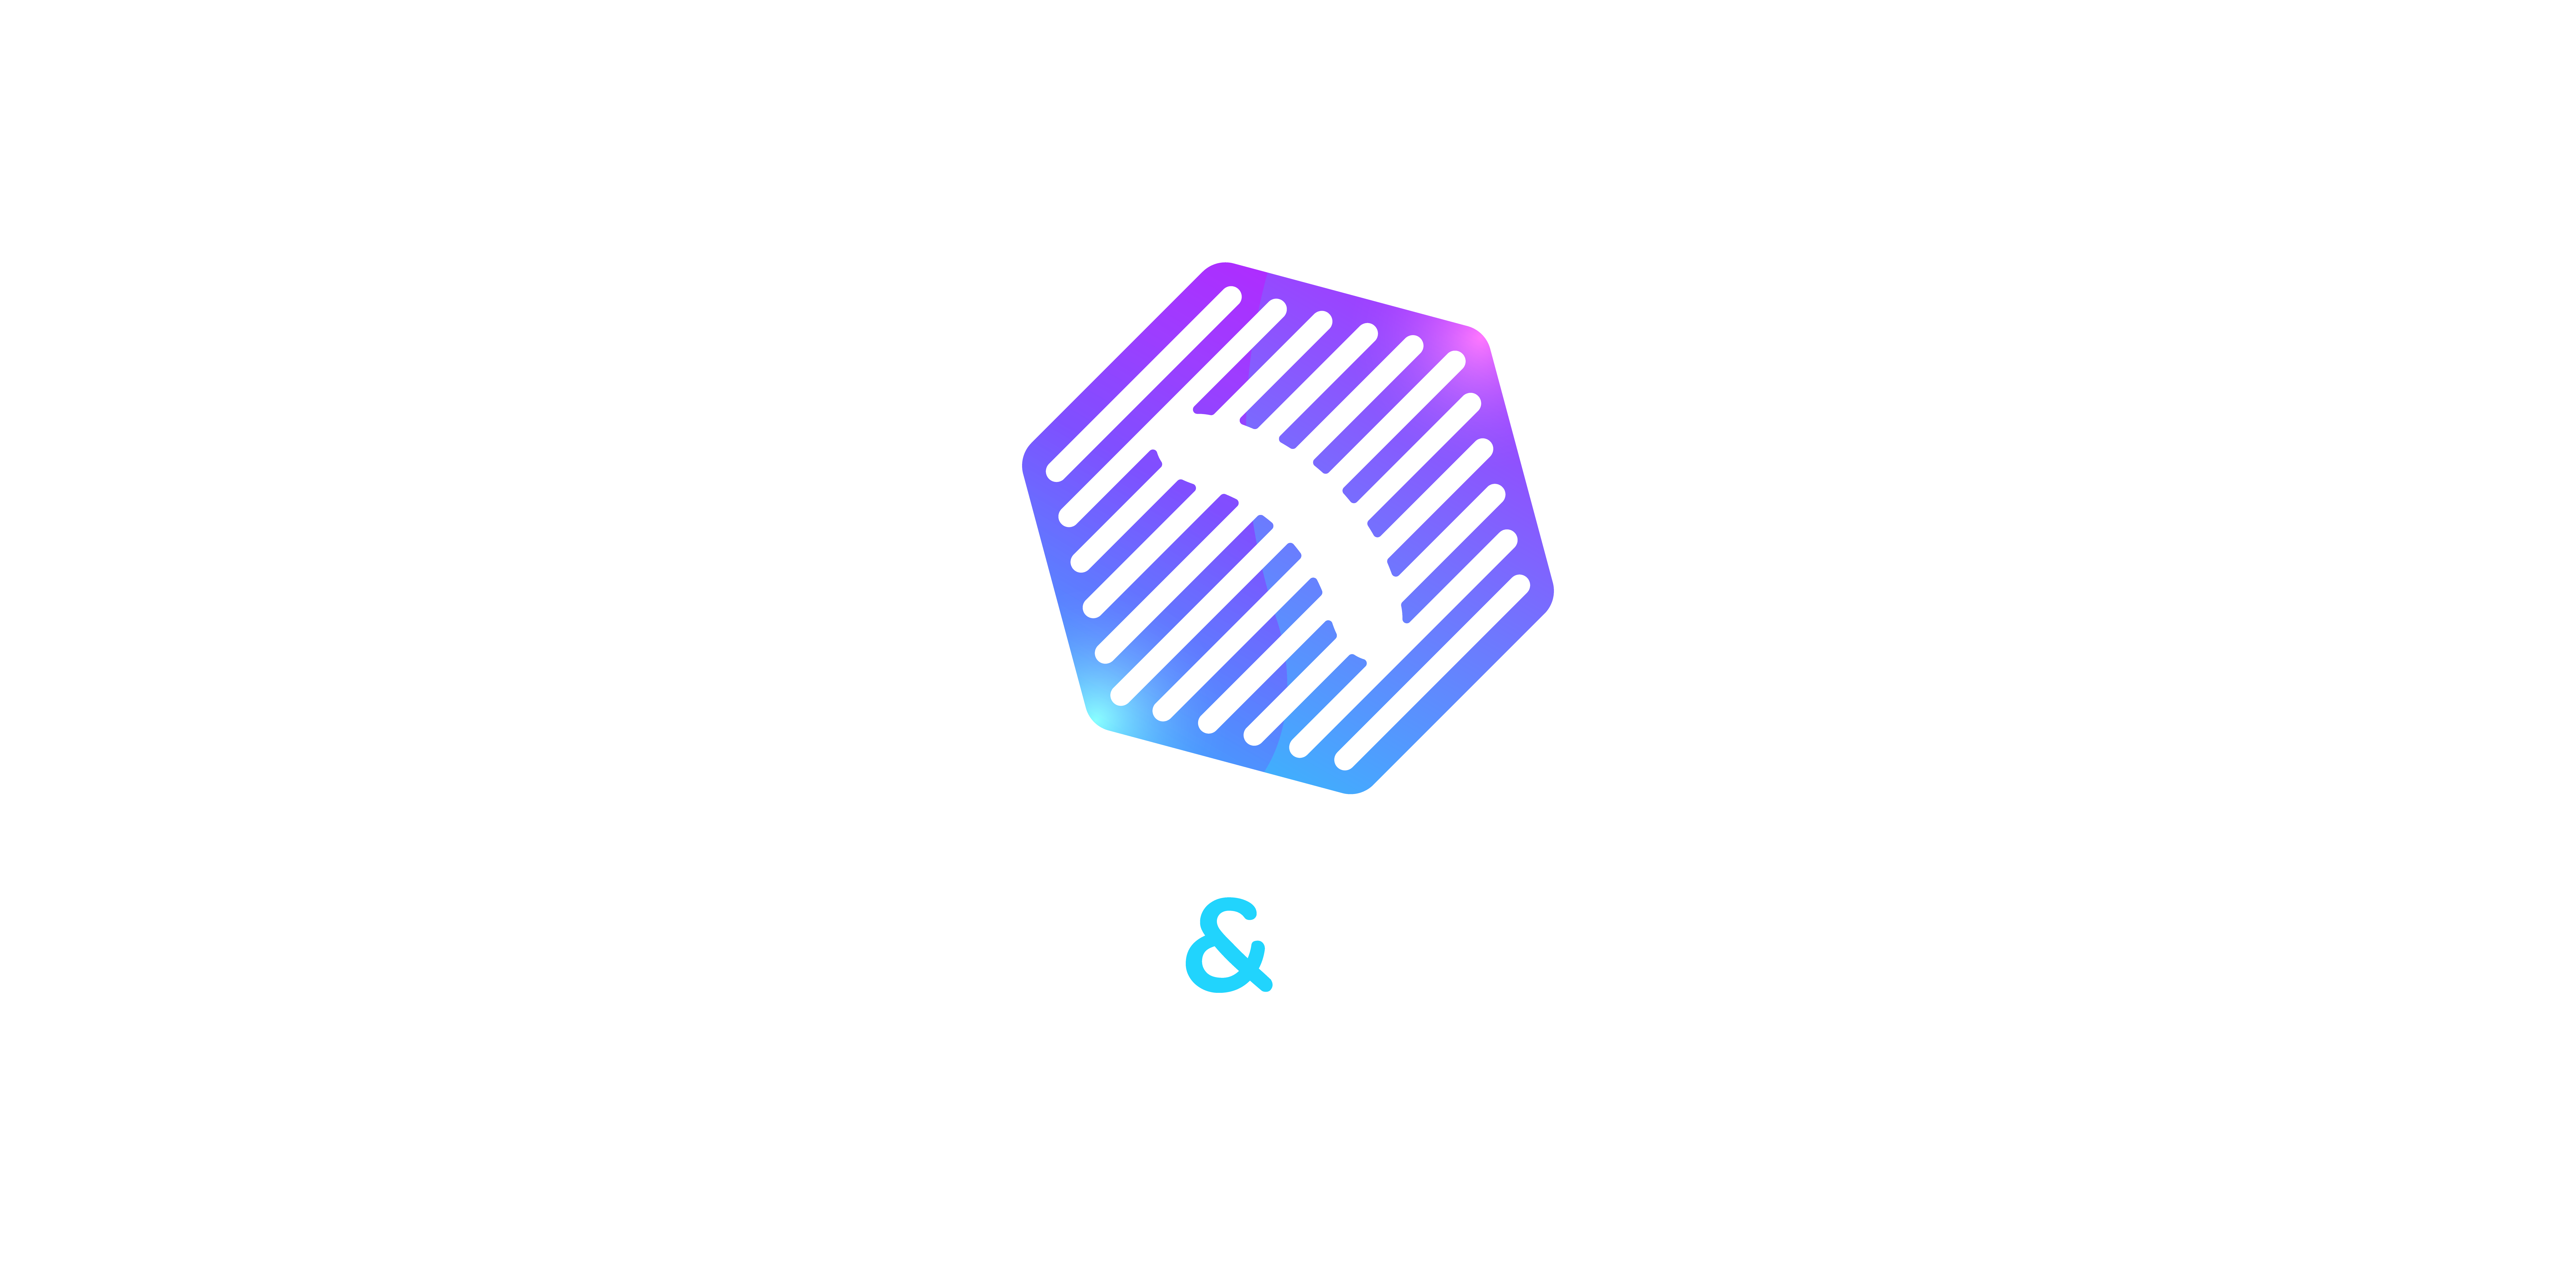 Wed Dev & Sausages logo